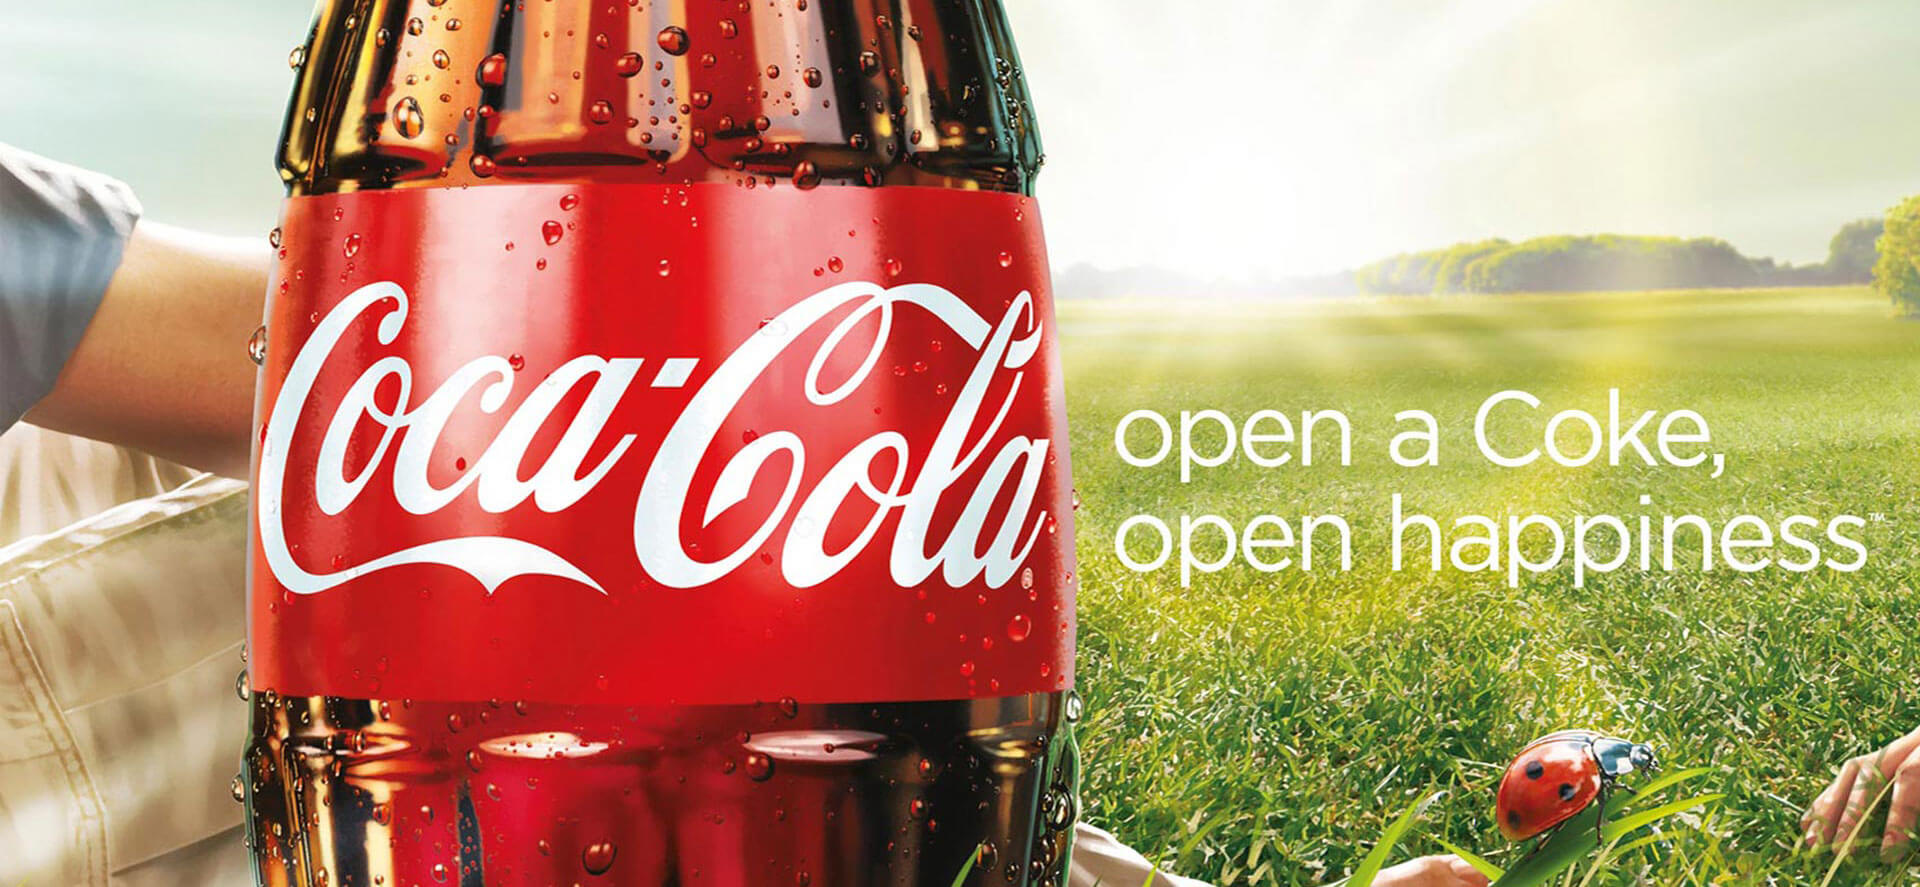 “Open happiness”, de Coca Cola